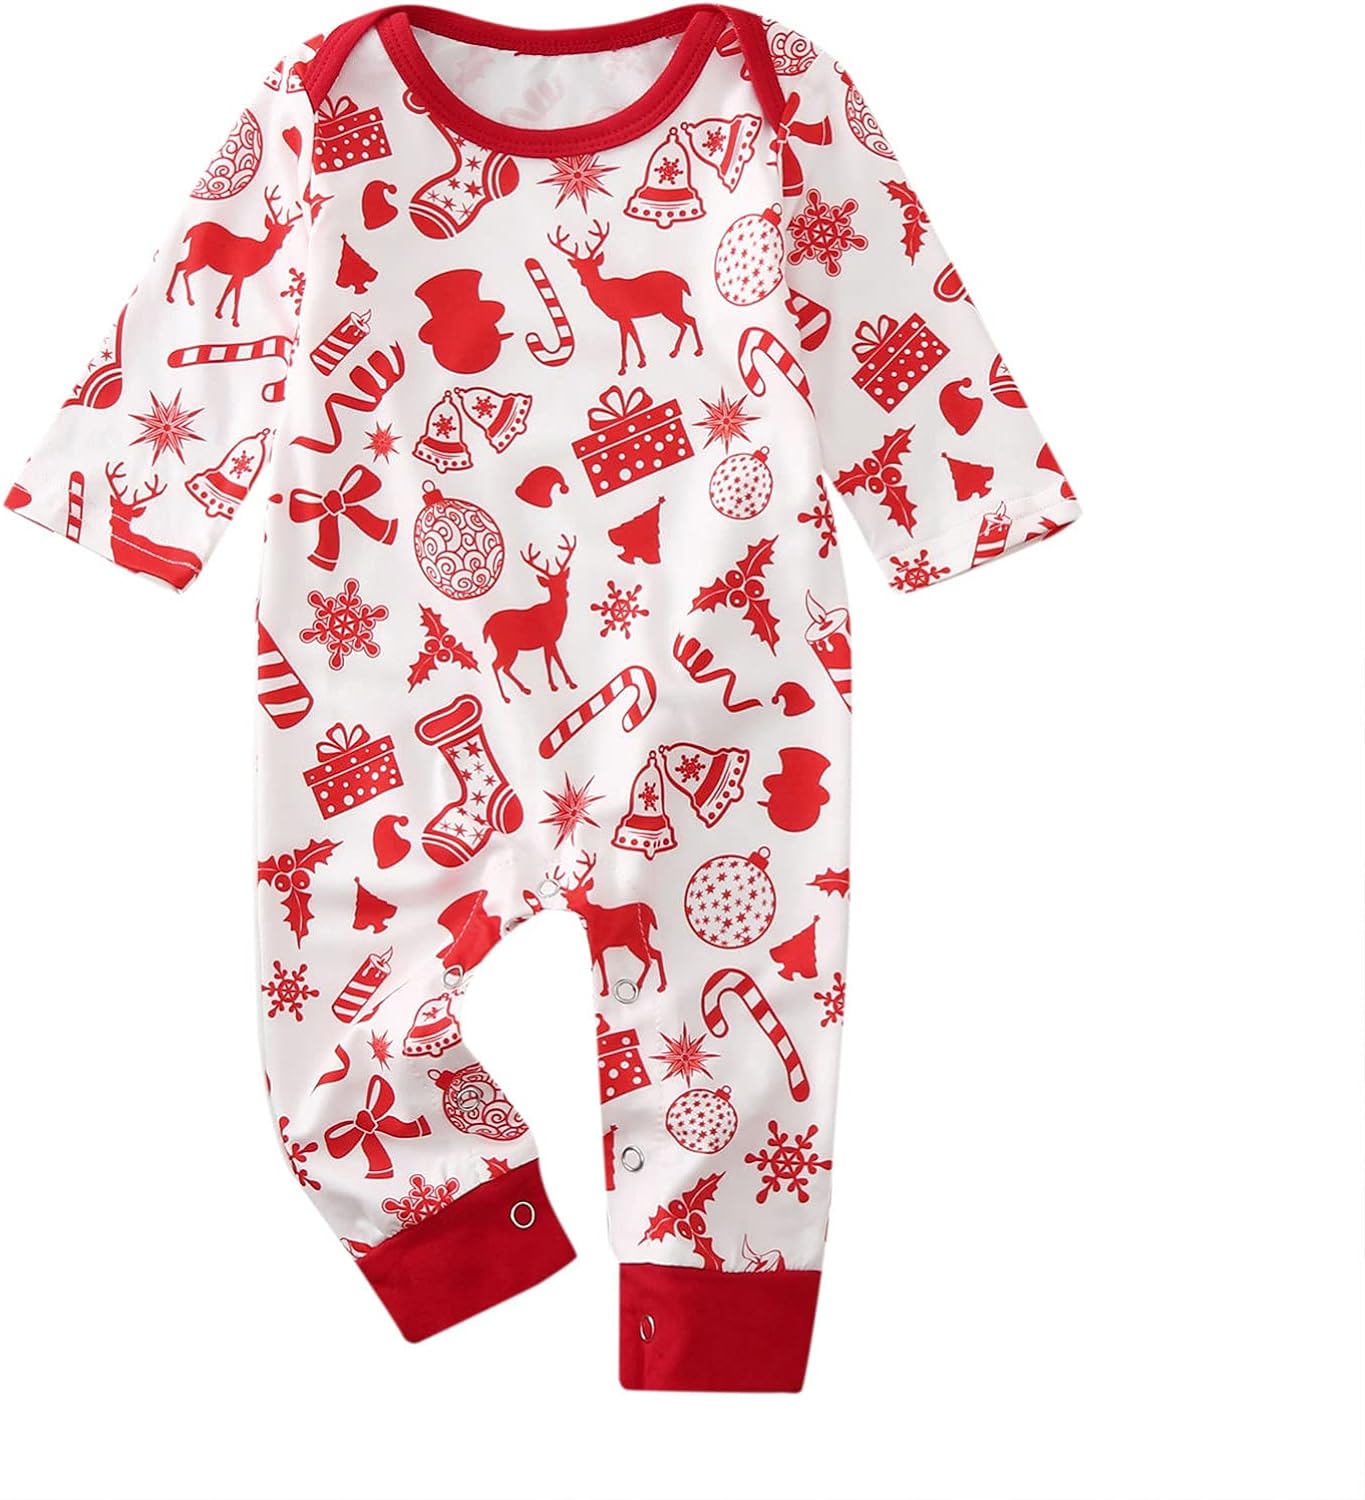 Baby Girls Boys Romper Christmas Jumpsuit Deer Head Infant Playsuit Xmas Clothes 